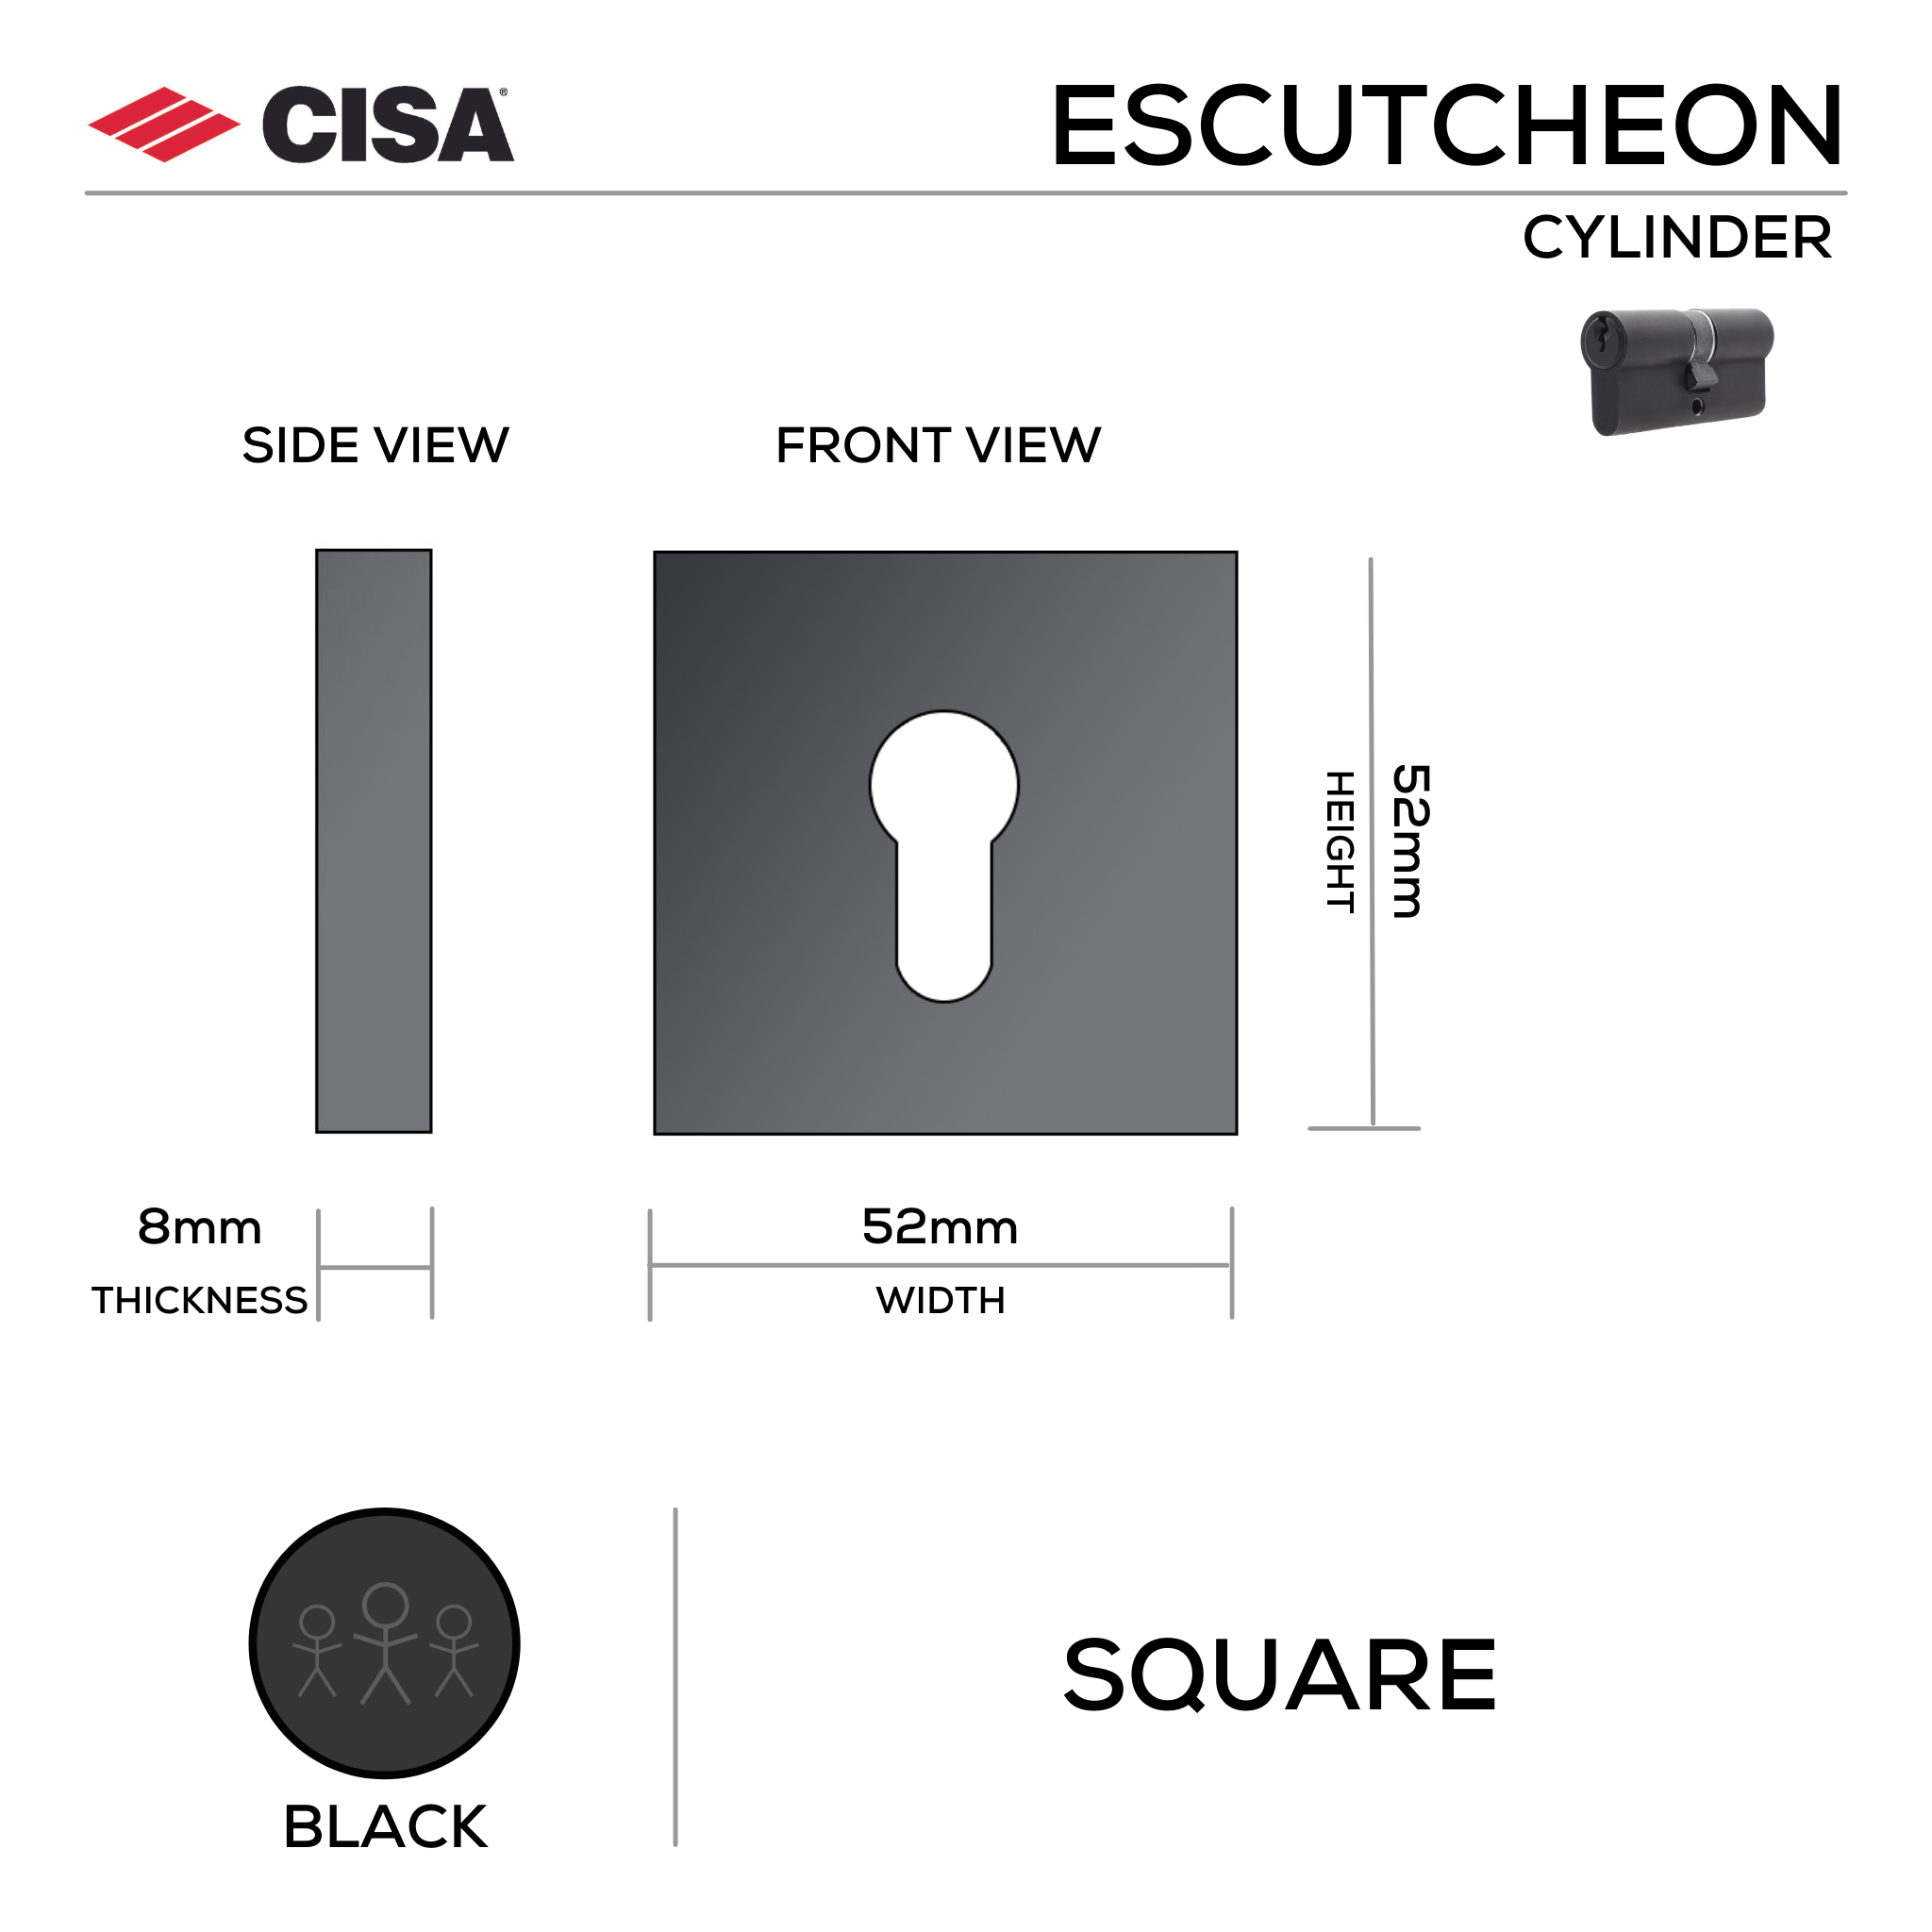 FE.S.C.MBL, Cylinder Escutcheon, Square Rose, 52mm (h) x 52mm (w) x 8mm (t), Black, CISA